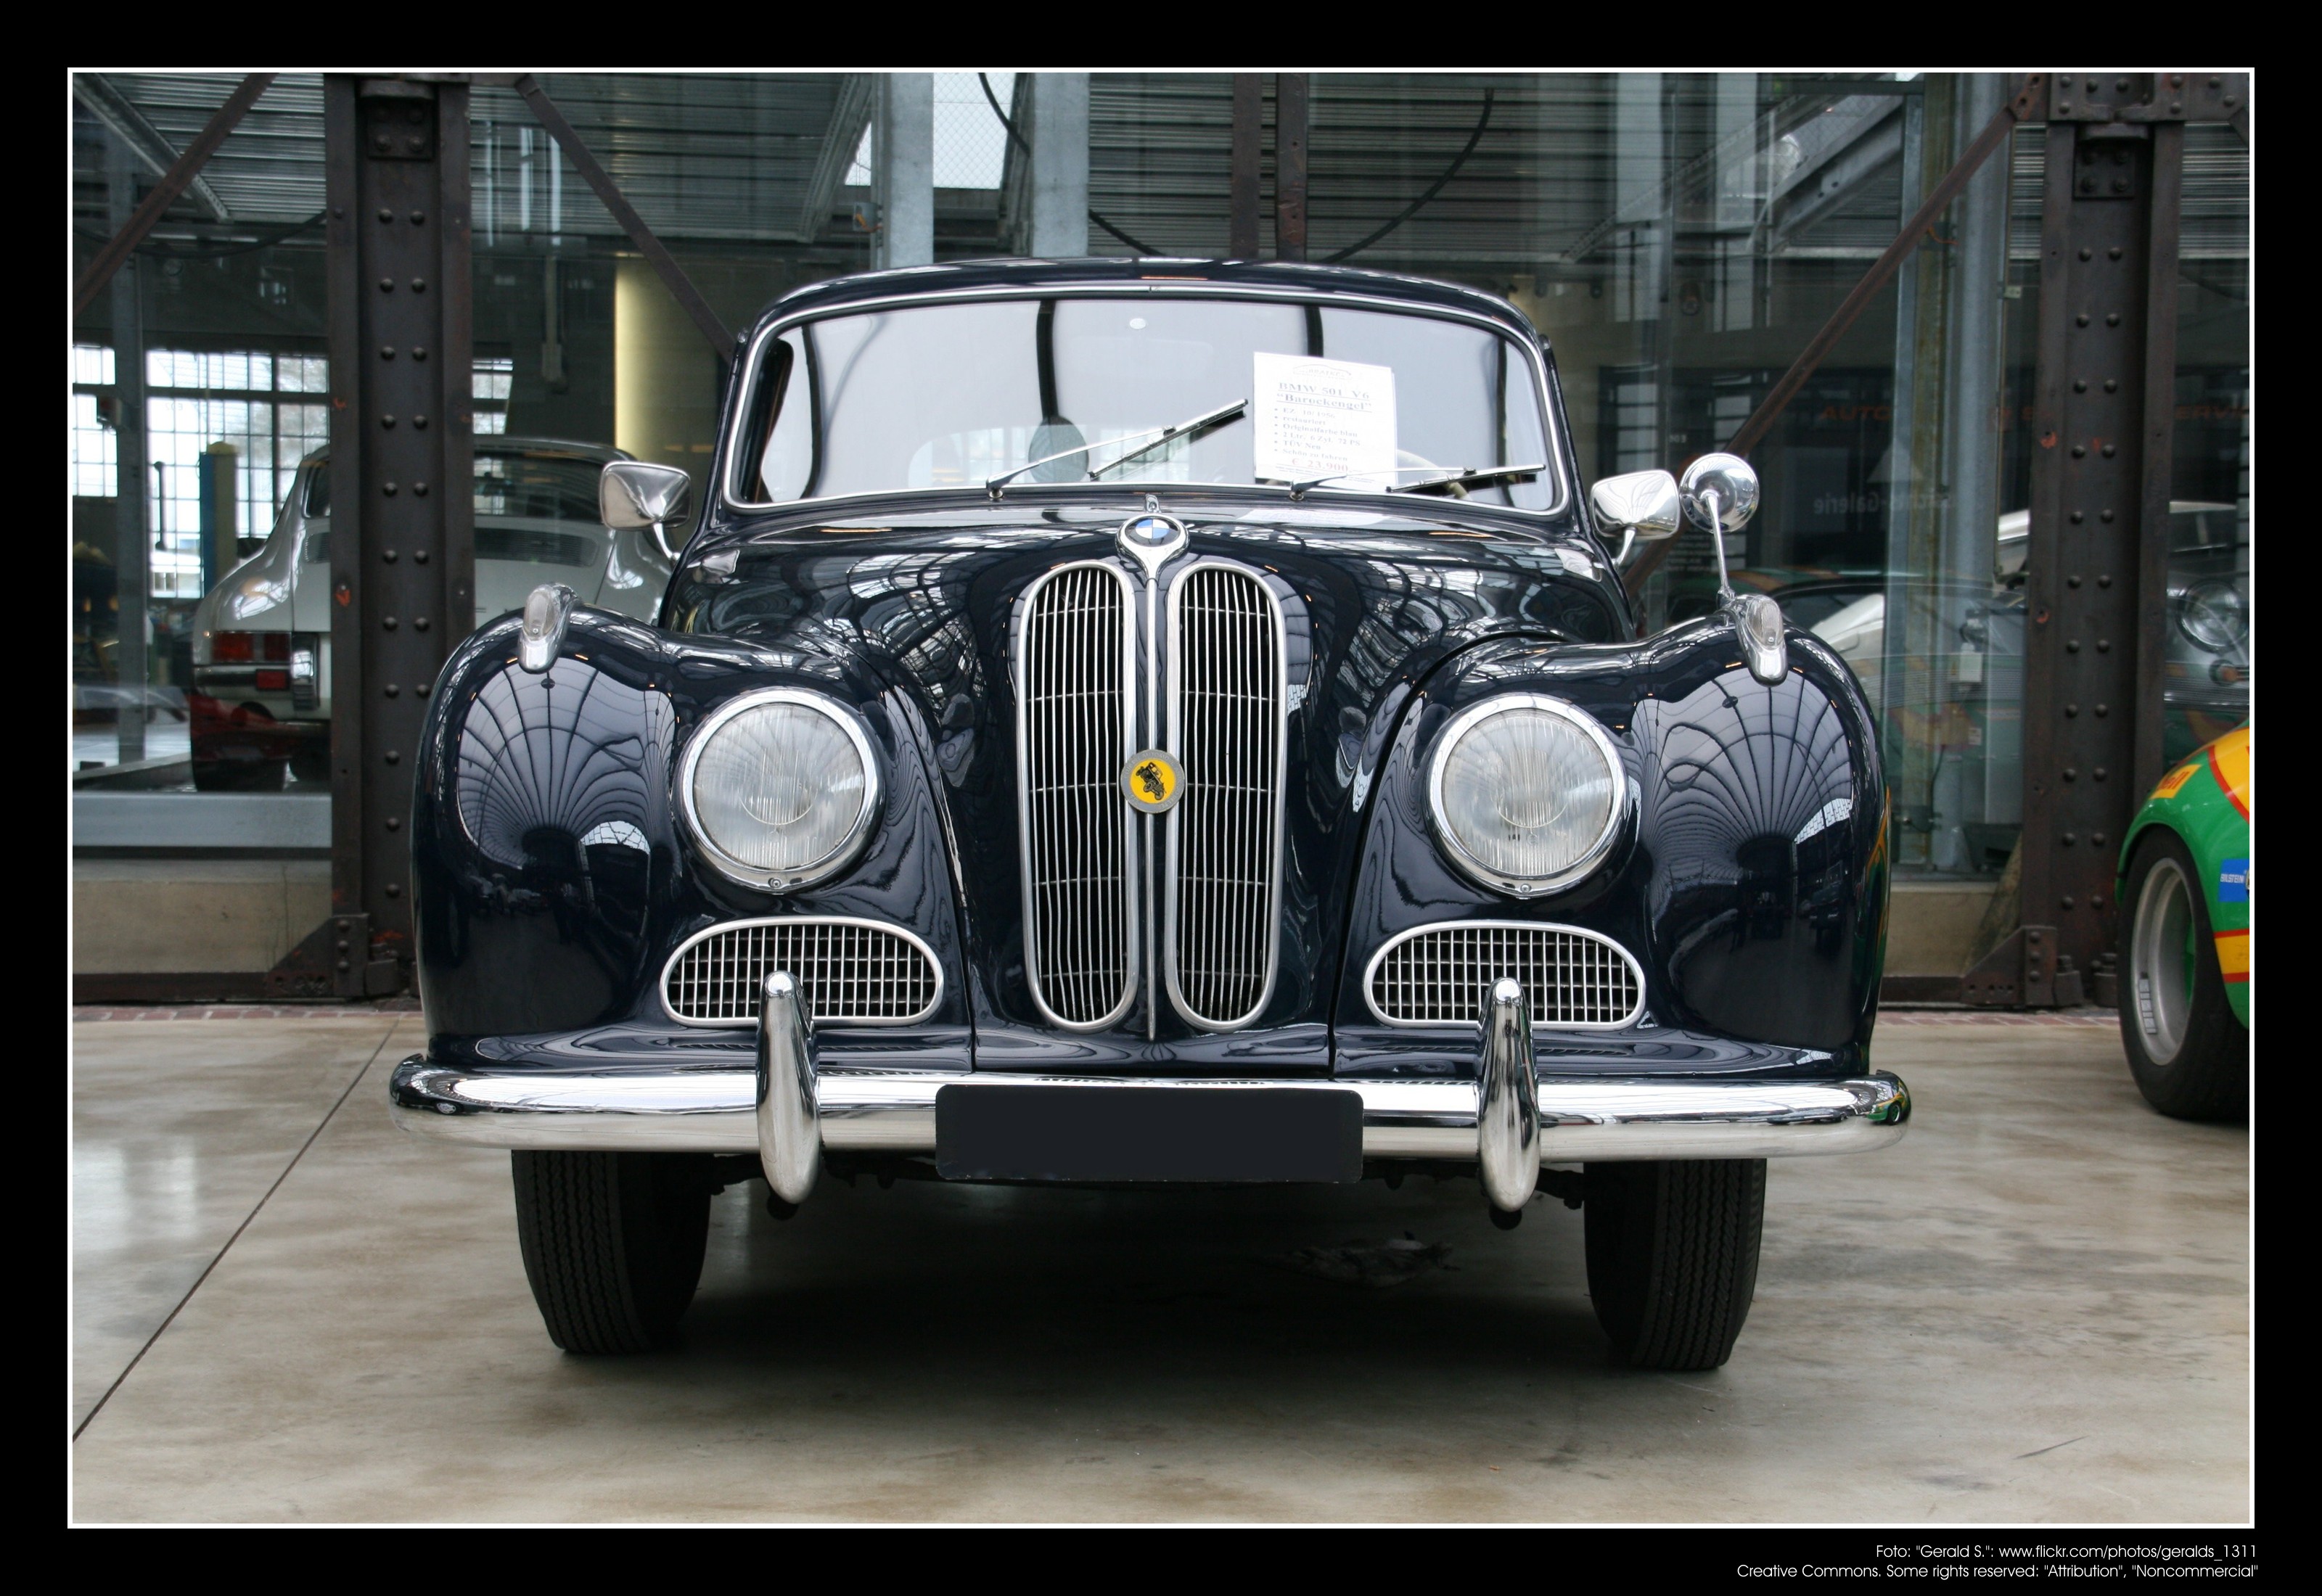 1956 BMW 501 V6 (02) | Flickr - Photo Sharing!